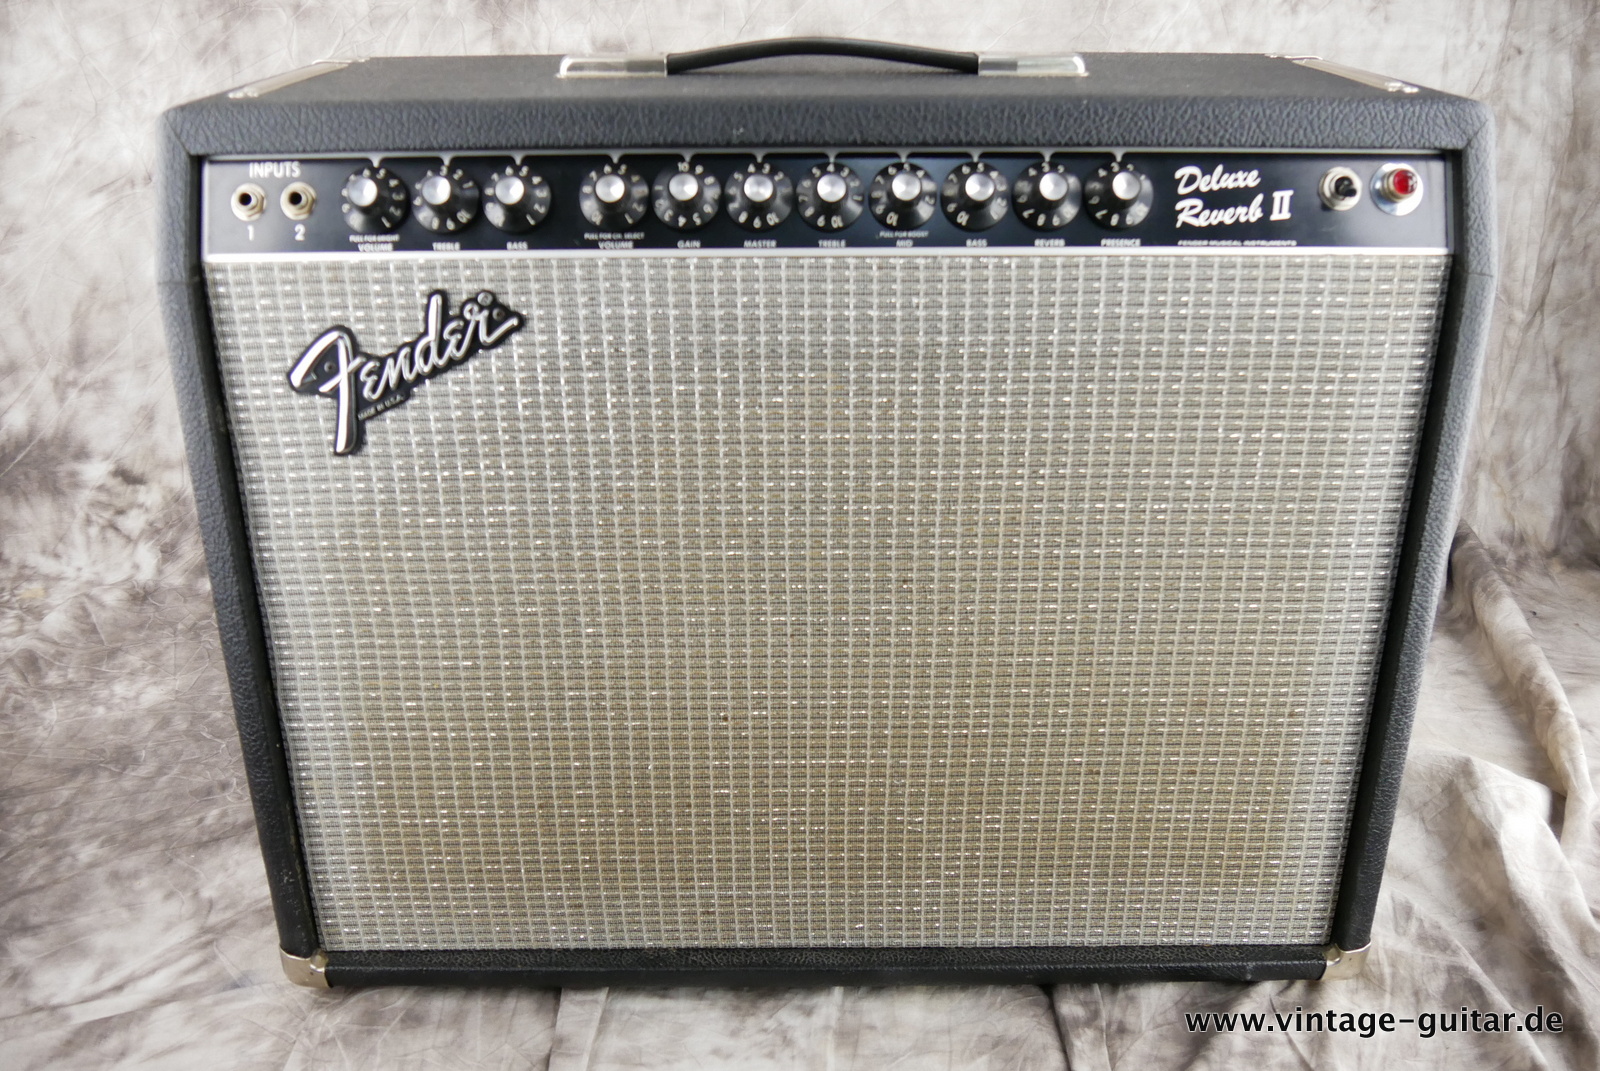 Fender-Deluxe-Reverb-II-1983-black-tolex-001.JPG